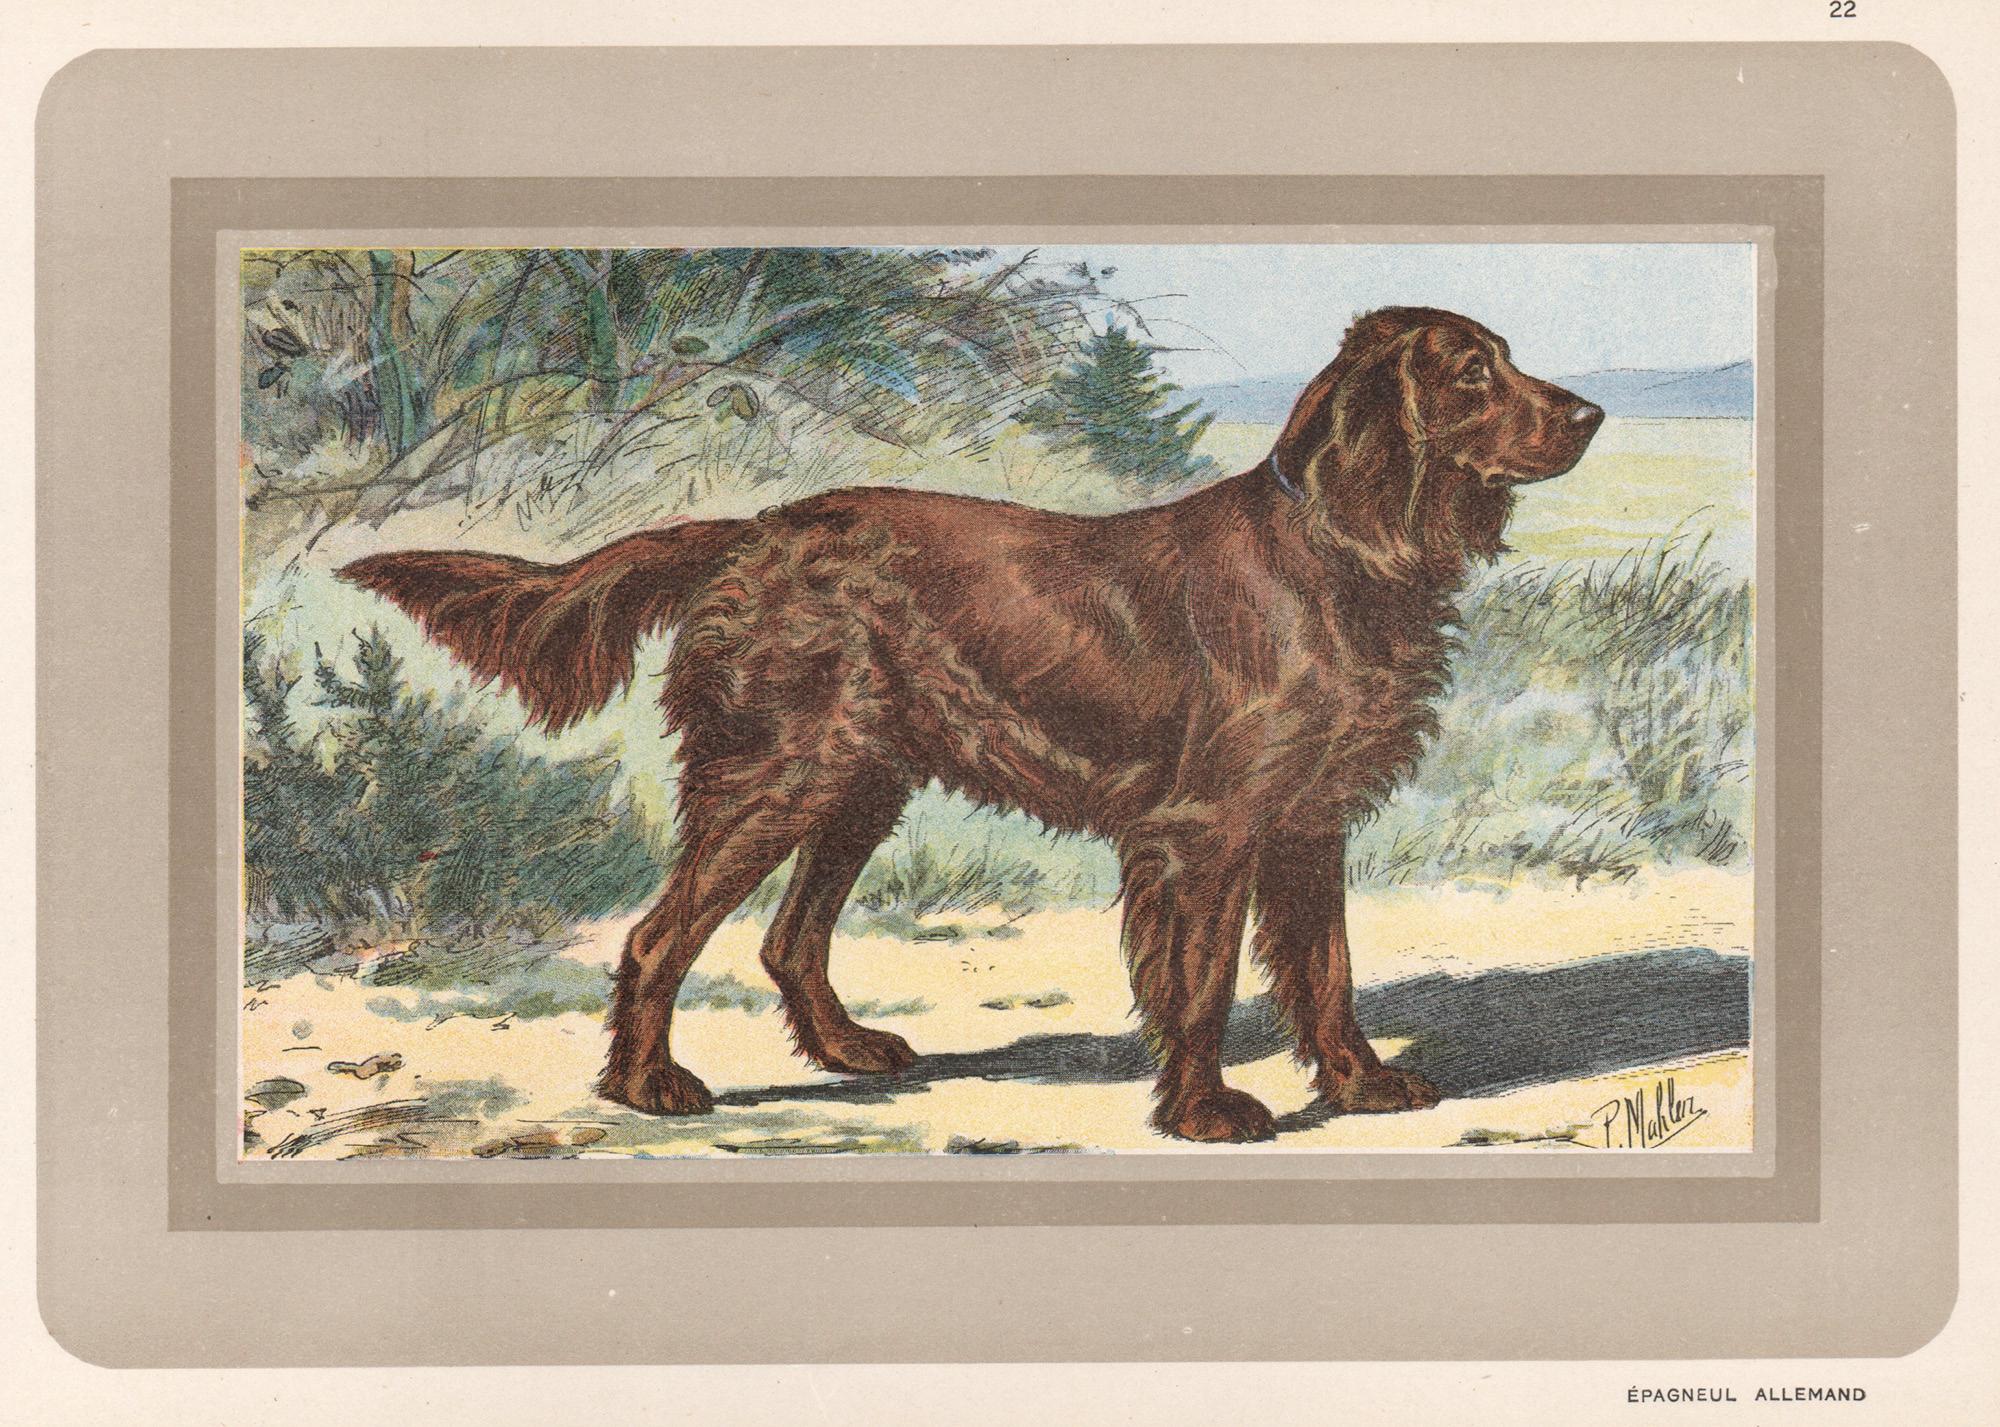 P. Mahler Animal Print - Epagneul Allemand - German Spaniel, French hound, dog chromolithograph, 1930s